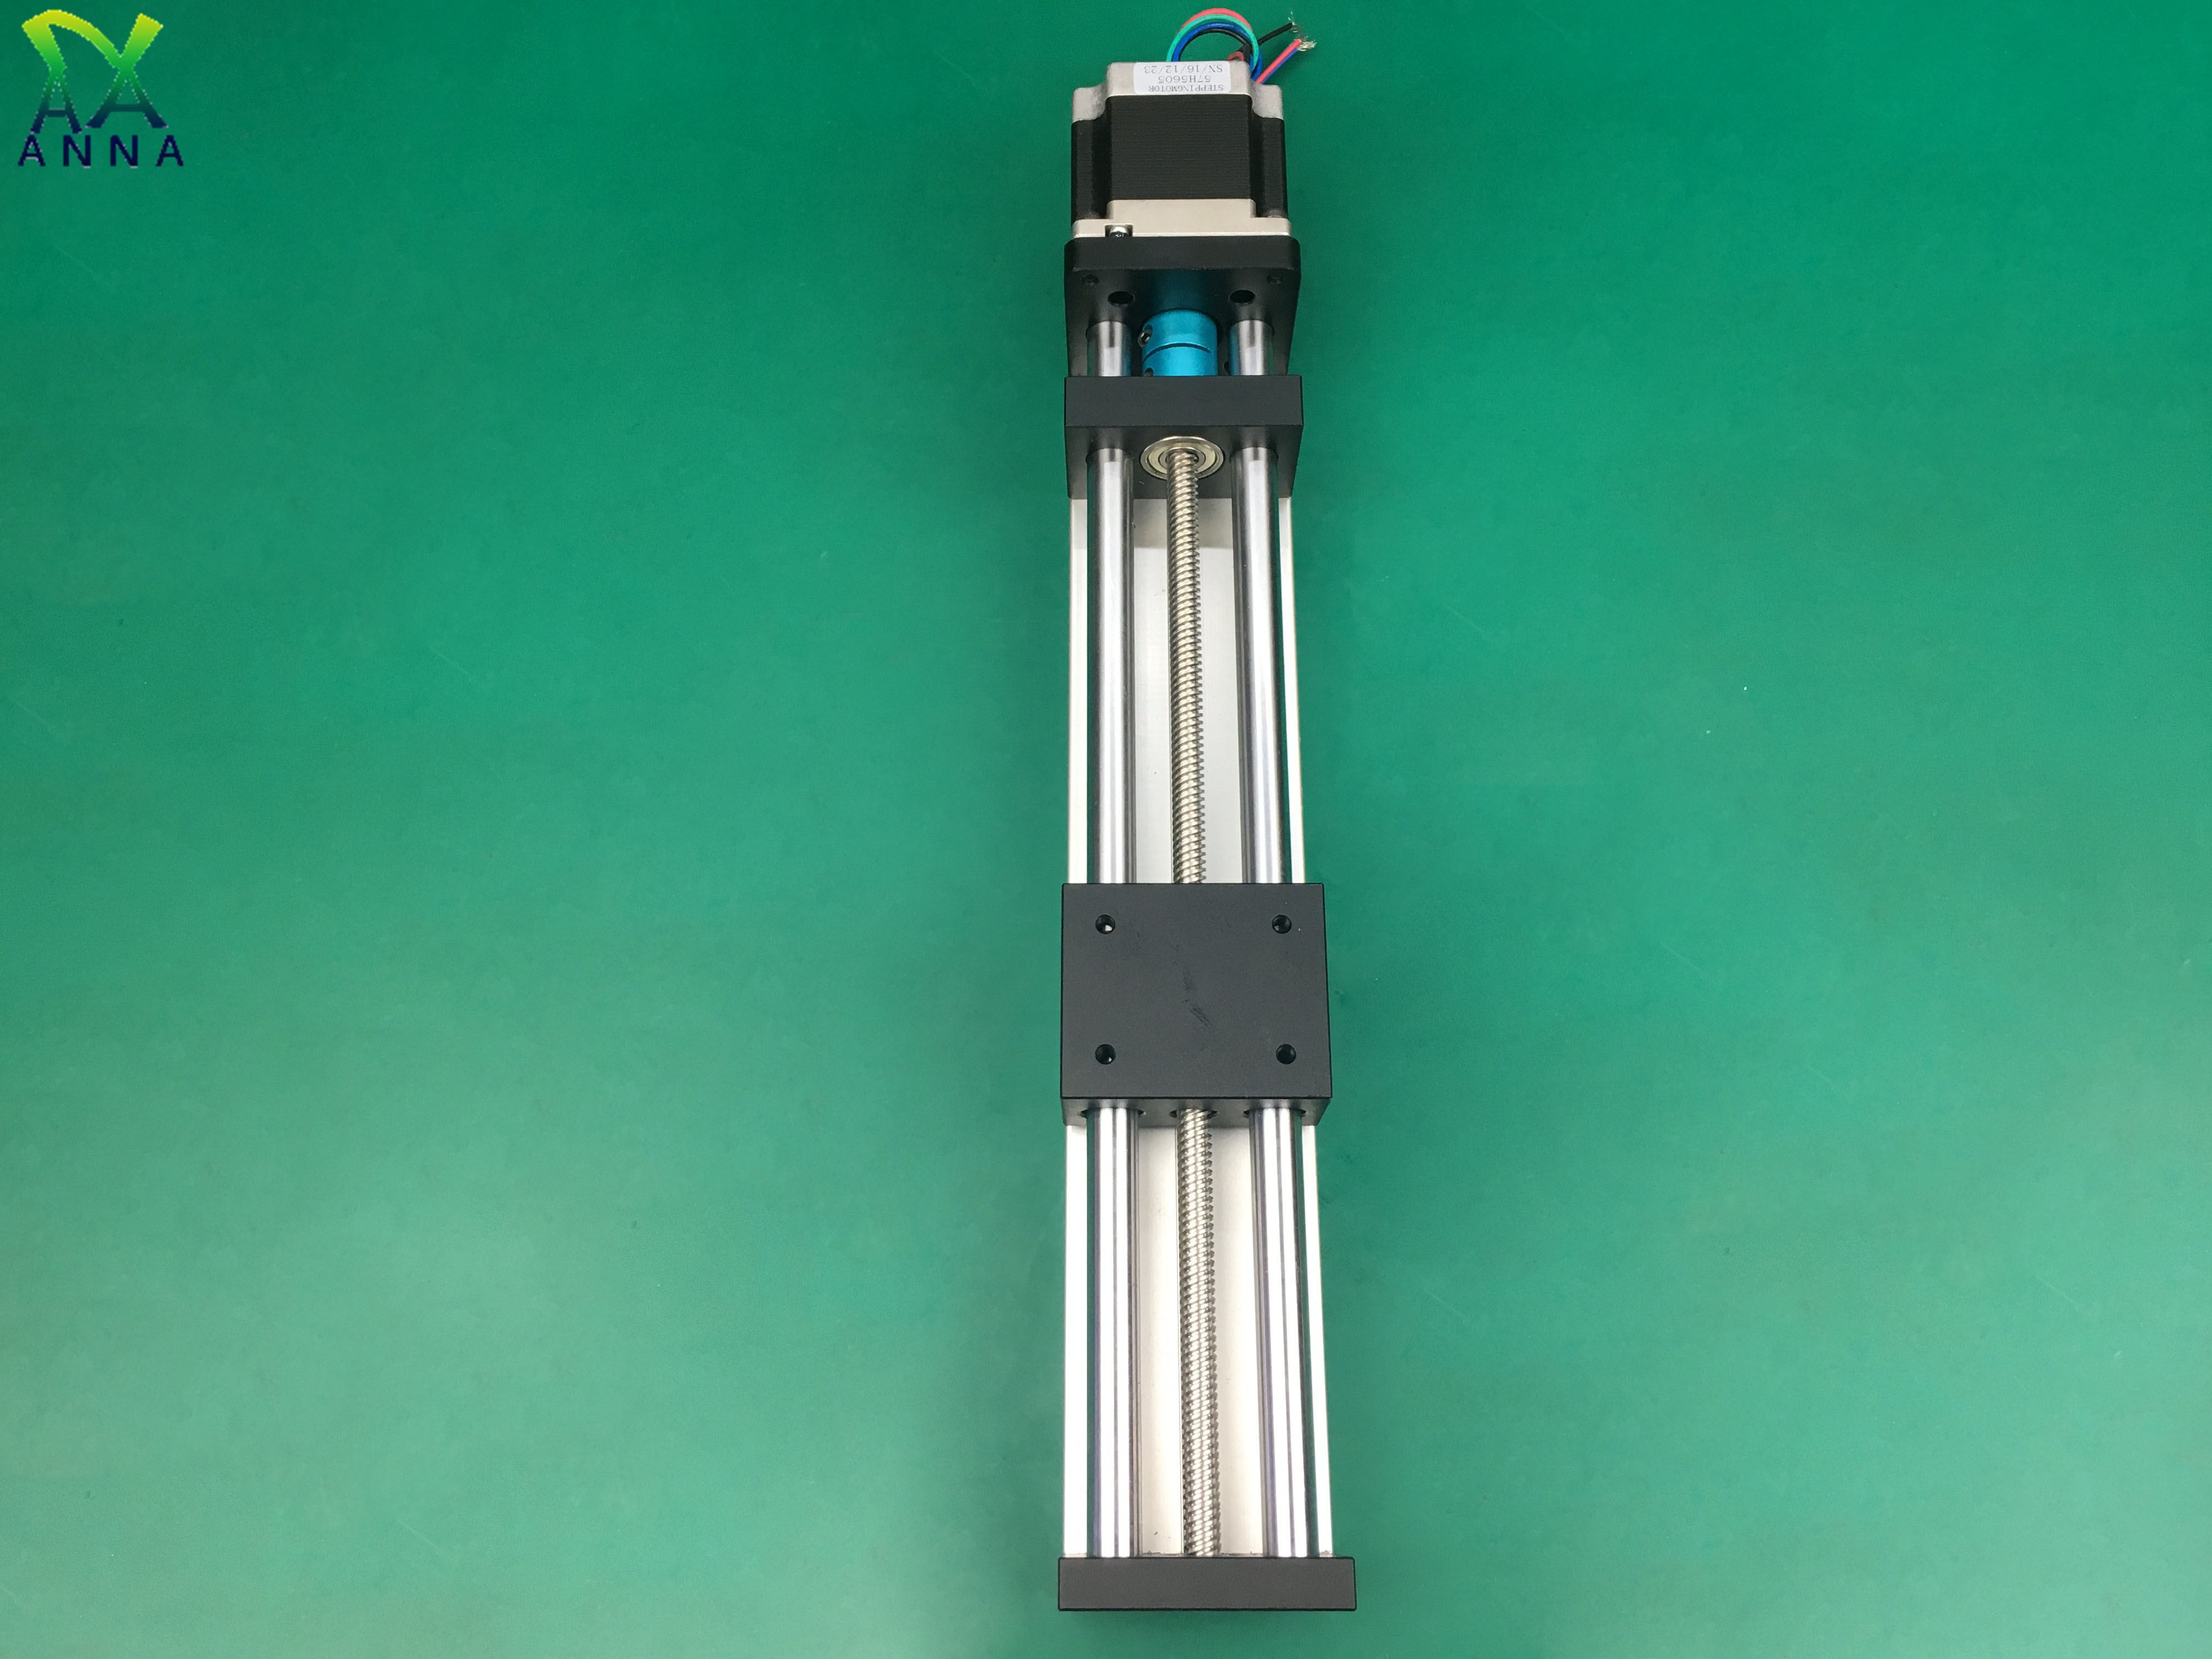 Robotic arm rod ball screw linear rail guide slide table actuator for cnc 500mm XYZ motion module parts motorized router kits